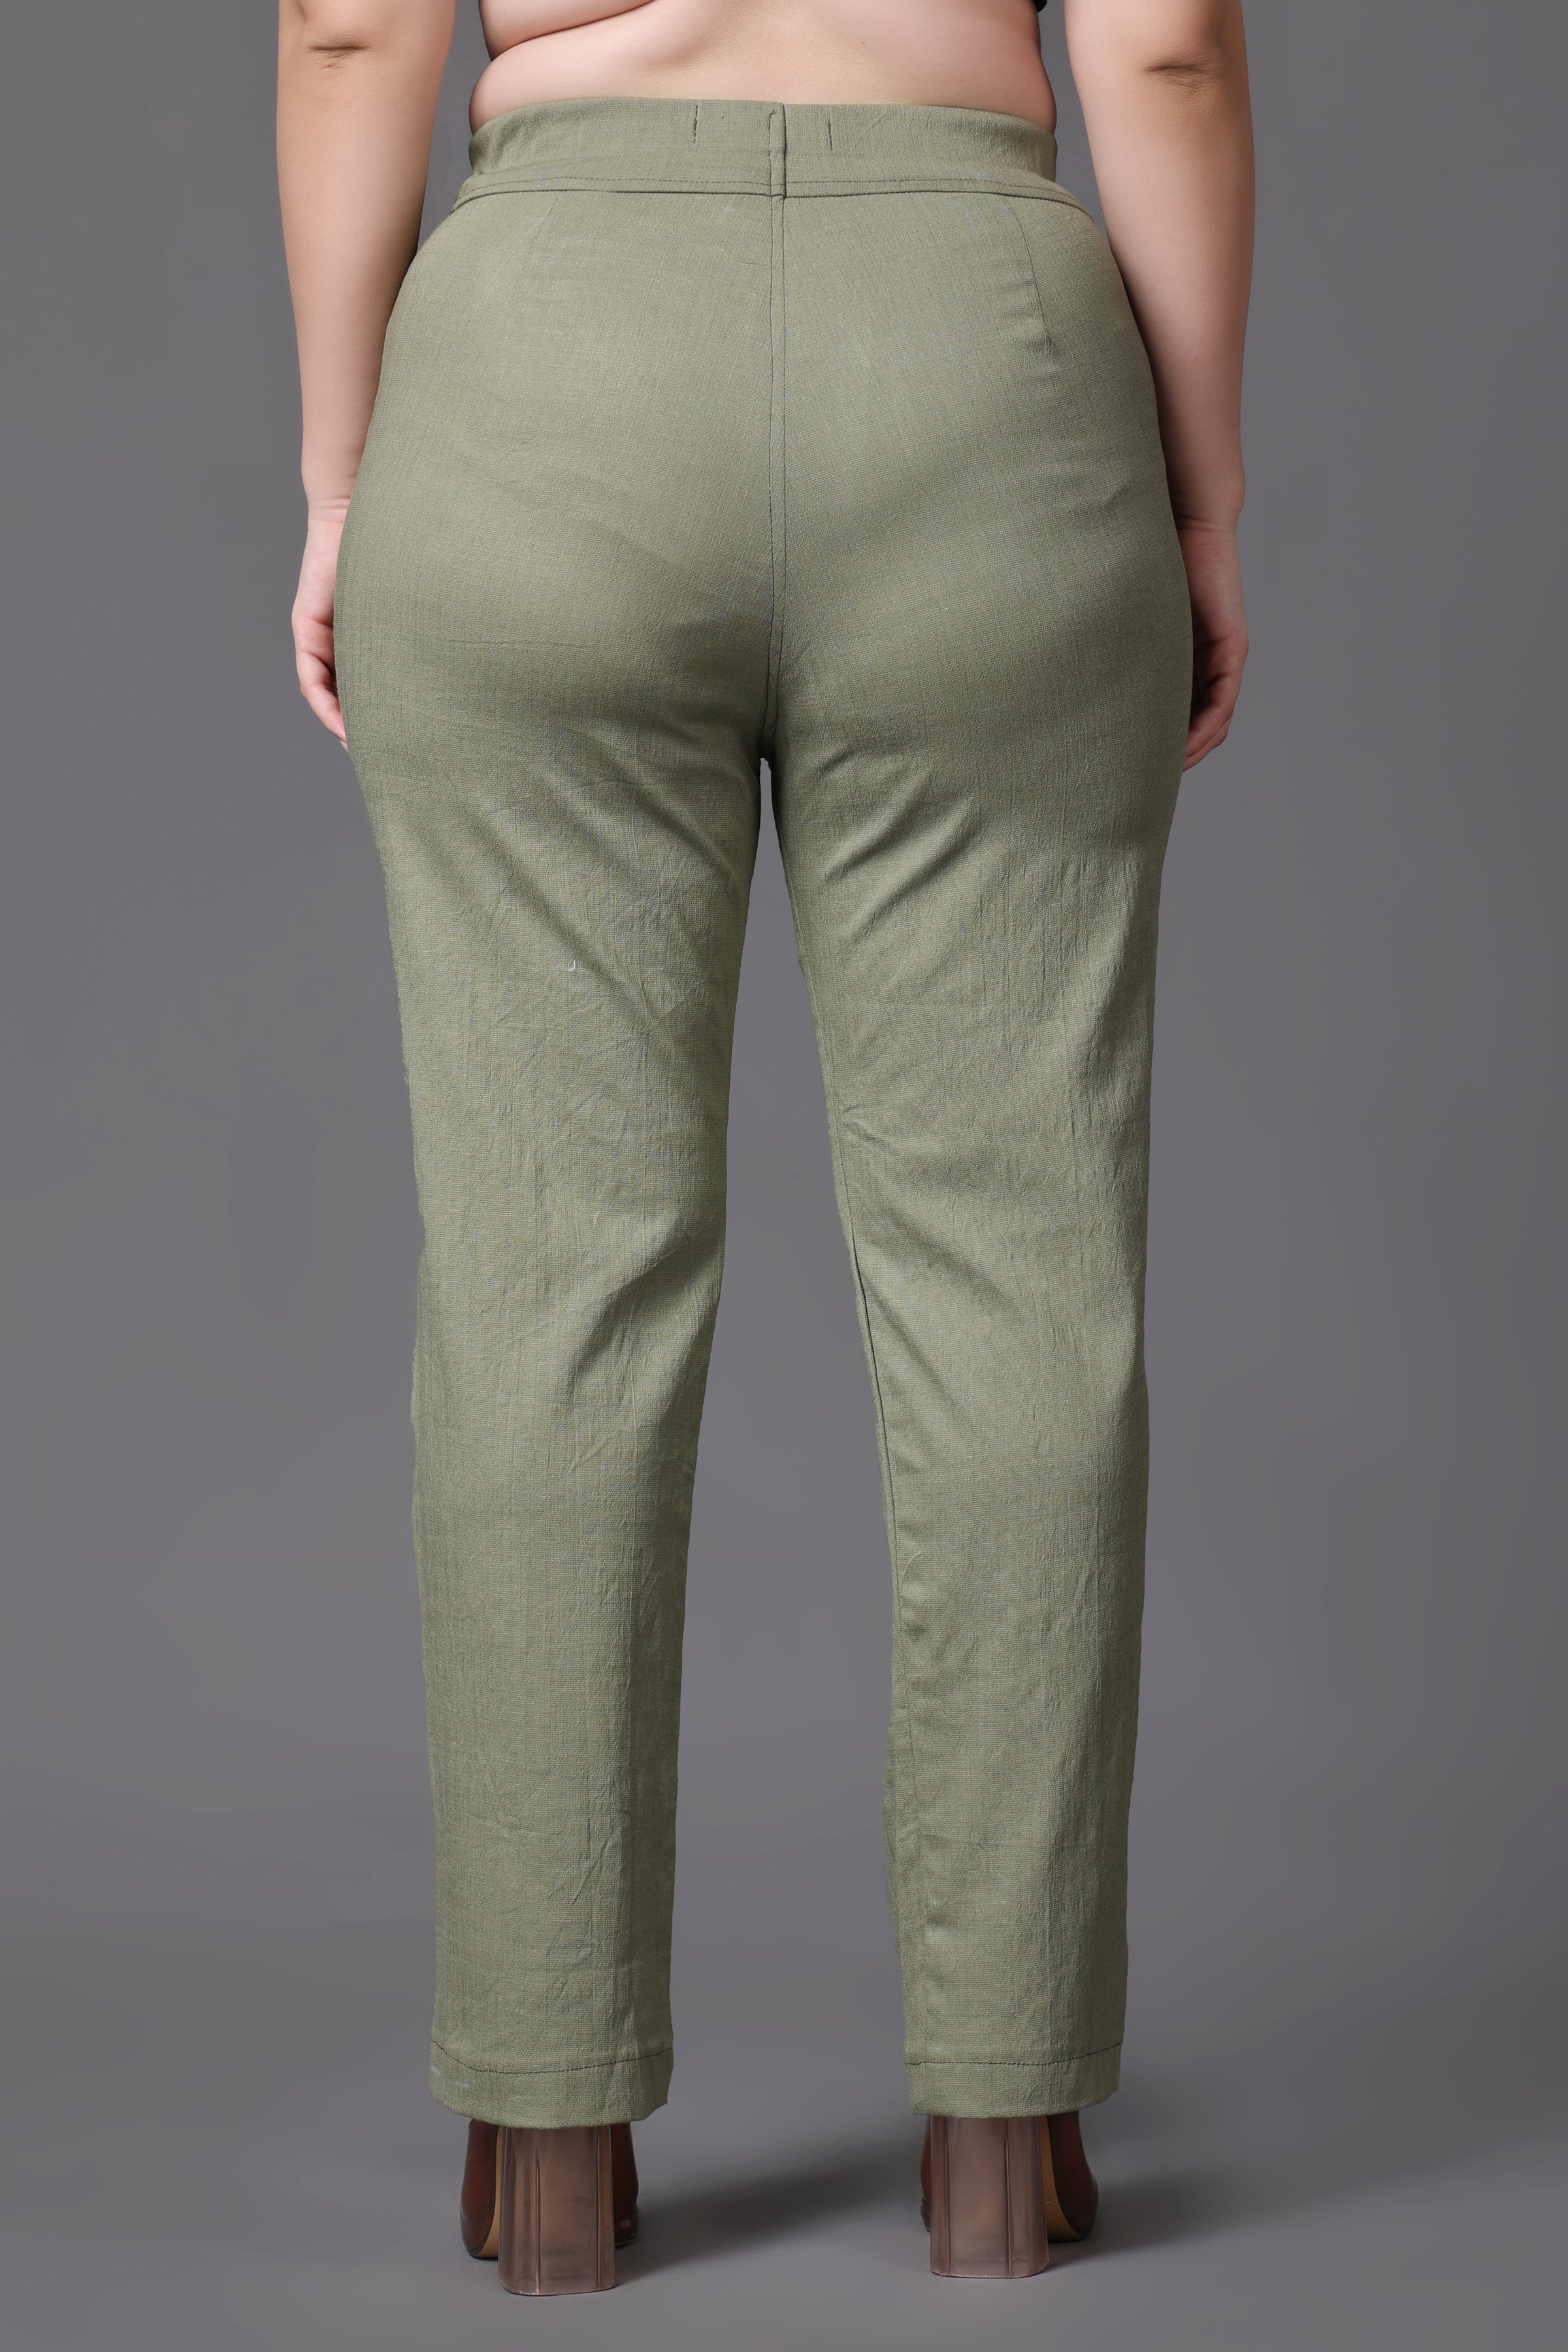 How long should men's formal pants be? - Quora